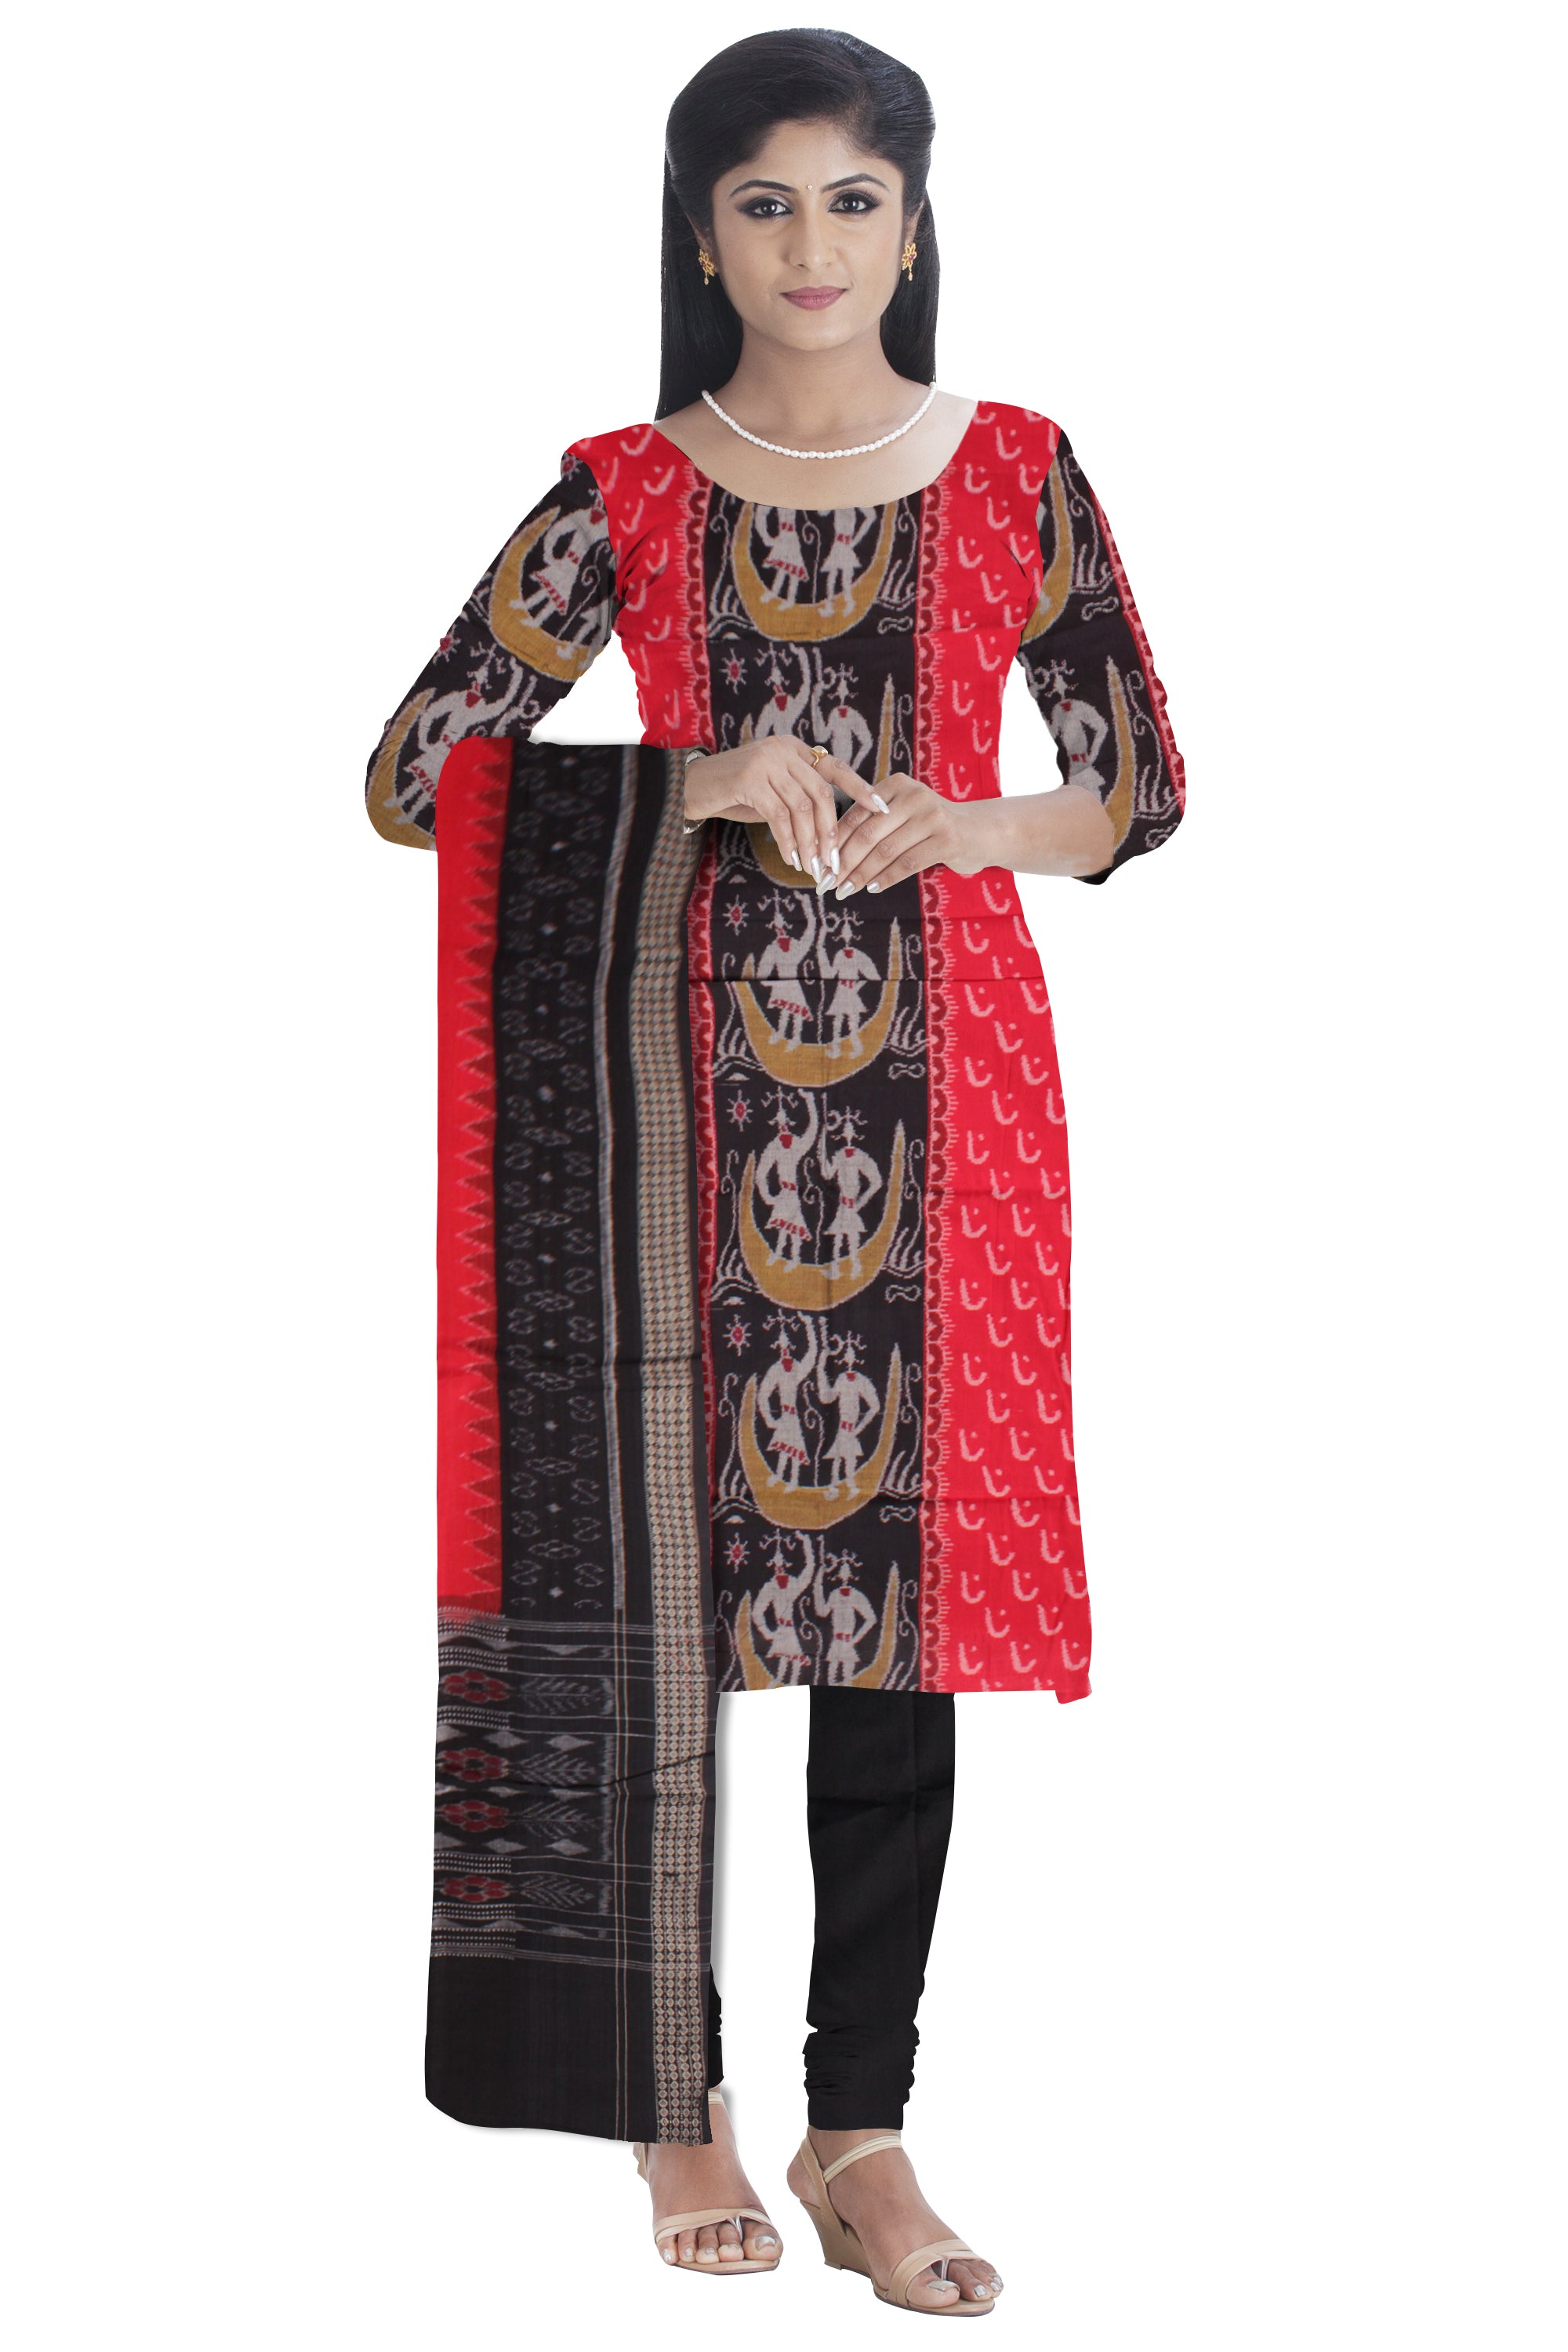 Styloom - Styloom Textile *a new indian ethnic trade* @styloom_textile Team  styloom: @sunil.80933 @c.priyaaa @kirtyanurag #textile #handloomlove  #ethnicwear #sambalpuri #sambalpuri_fashion #kurtis #dress | Facebook